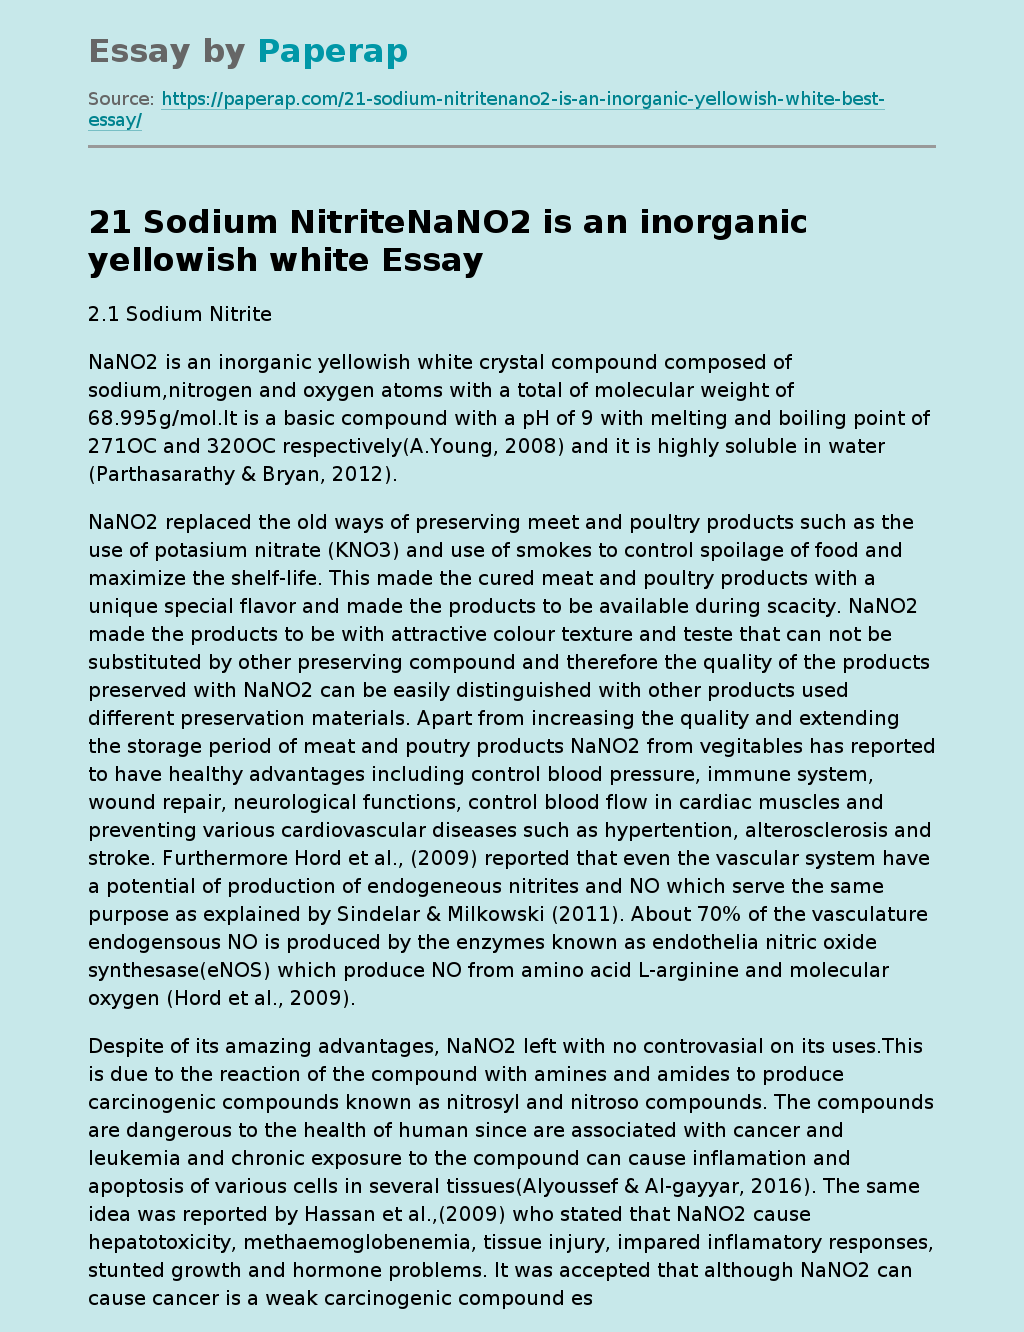 Sodium Nitrite and Oxidative Stress